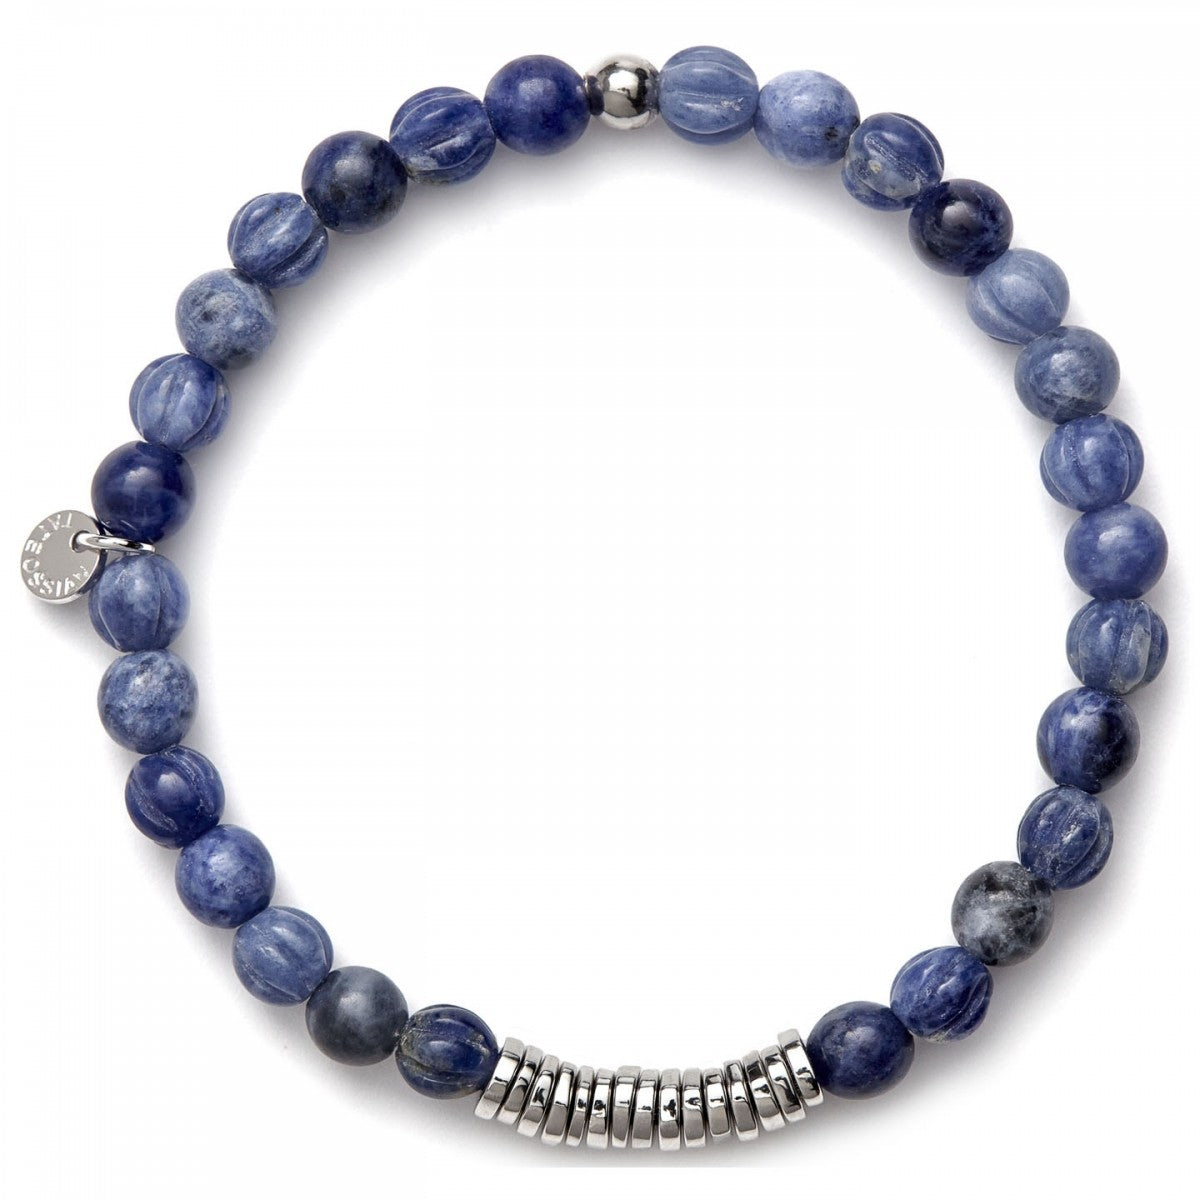 Tateossian Men's Indigo Bracelet, Blue Sodalite Beadeds with Silver Spacer Discs